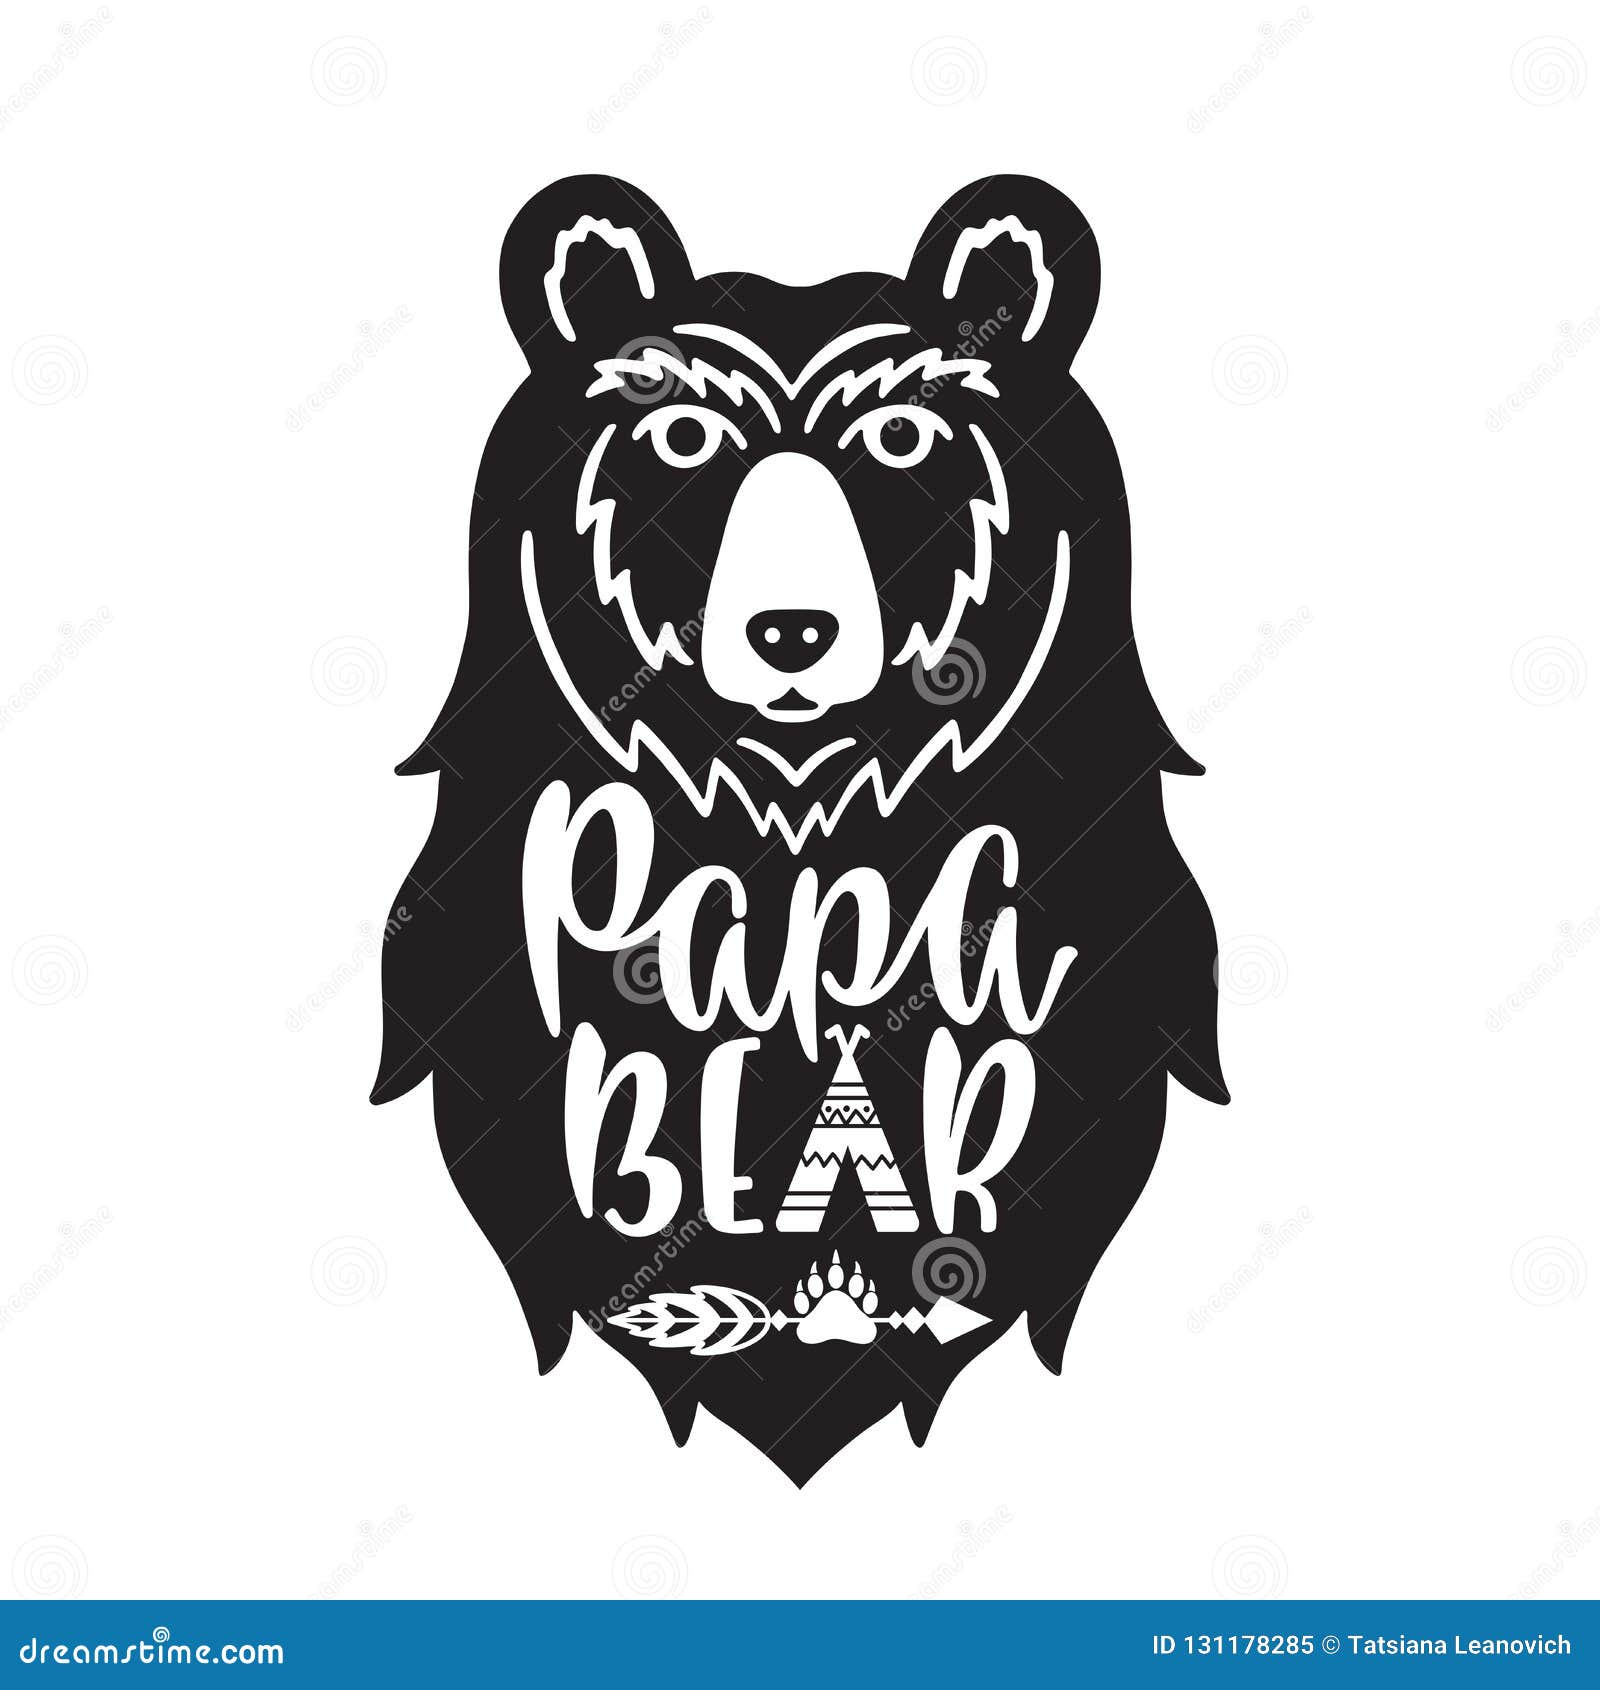 papa bear. hand drawn typography phrase with bear head, teepee, paw.   